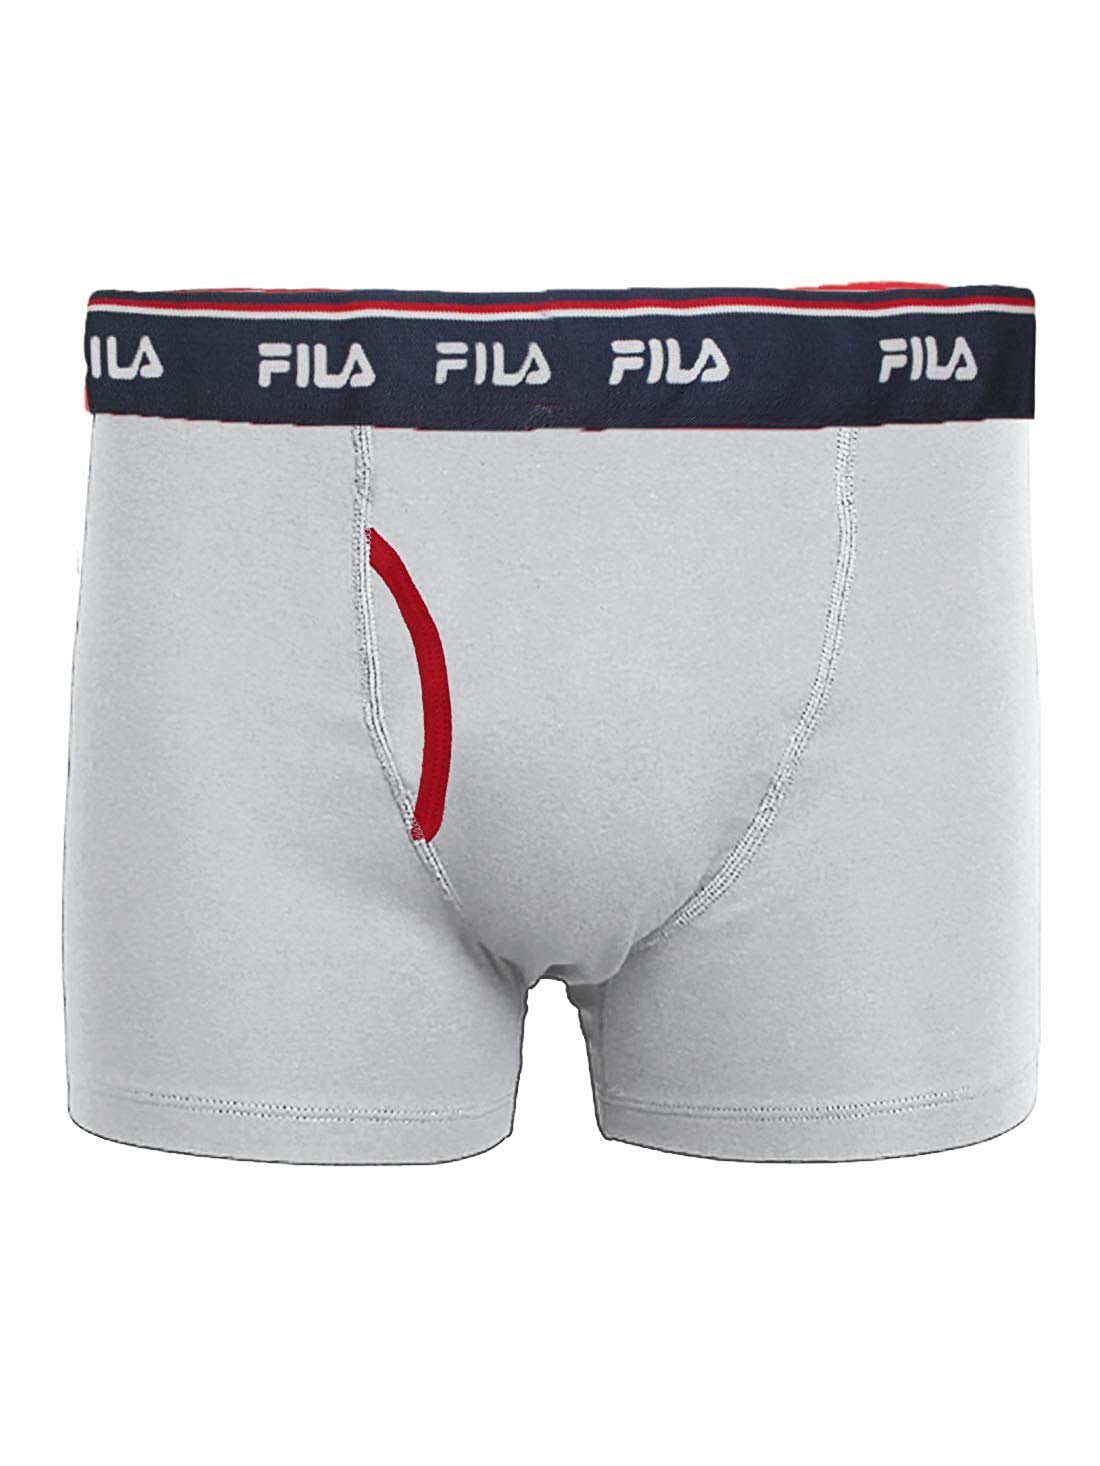 Fila Underwear - Our classic white Fila boxers never fail to stand